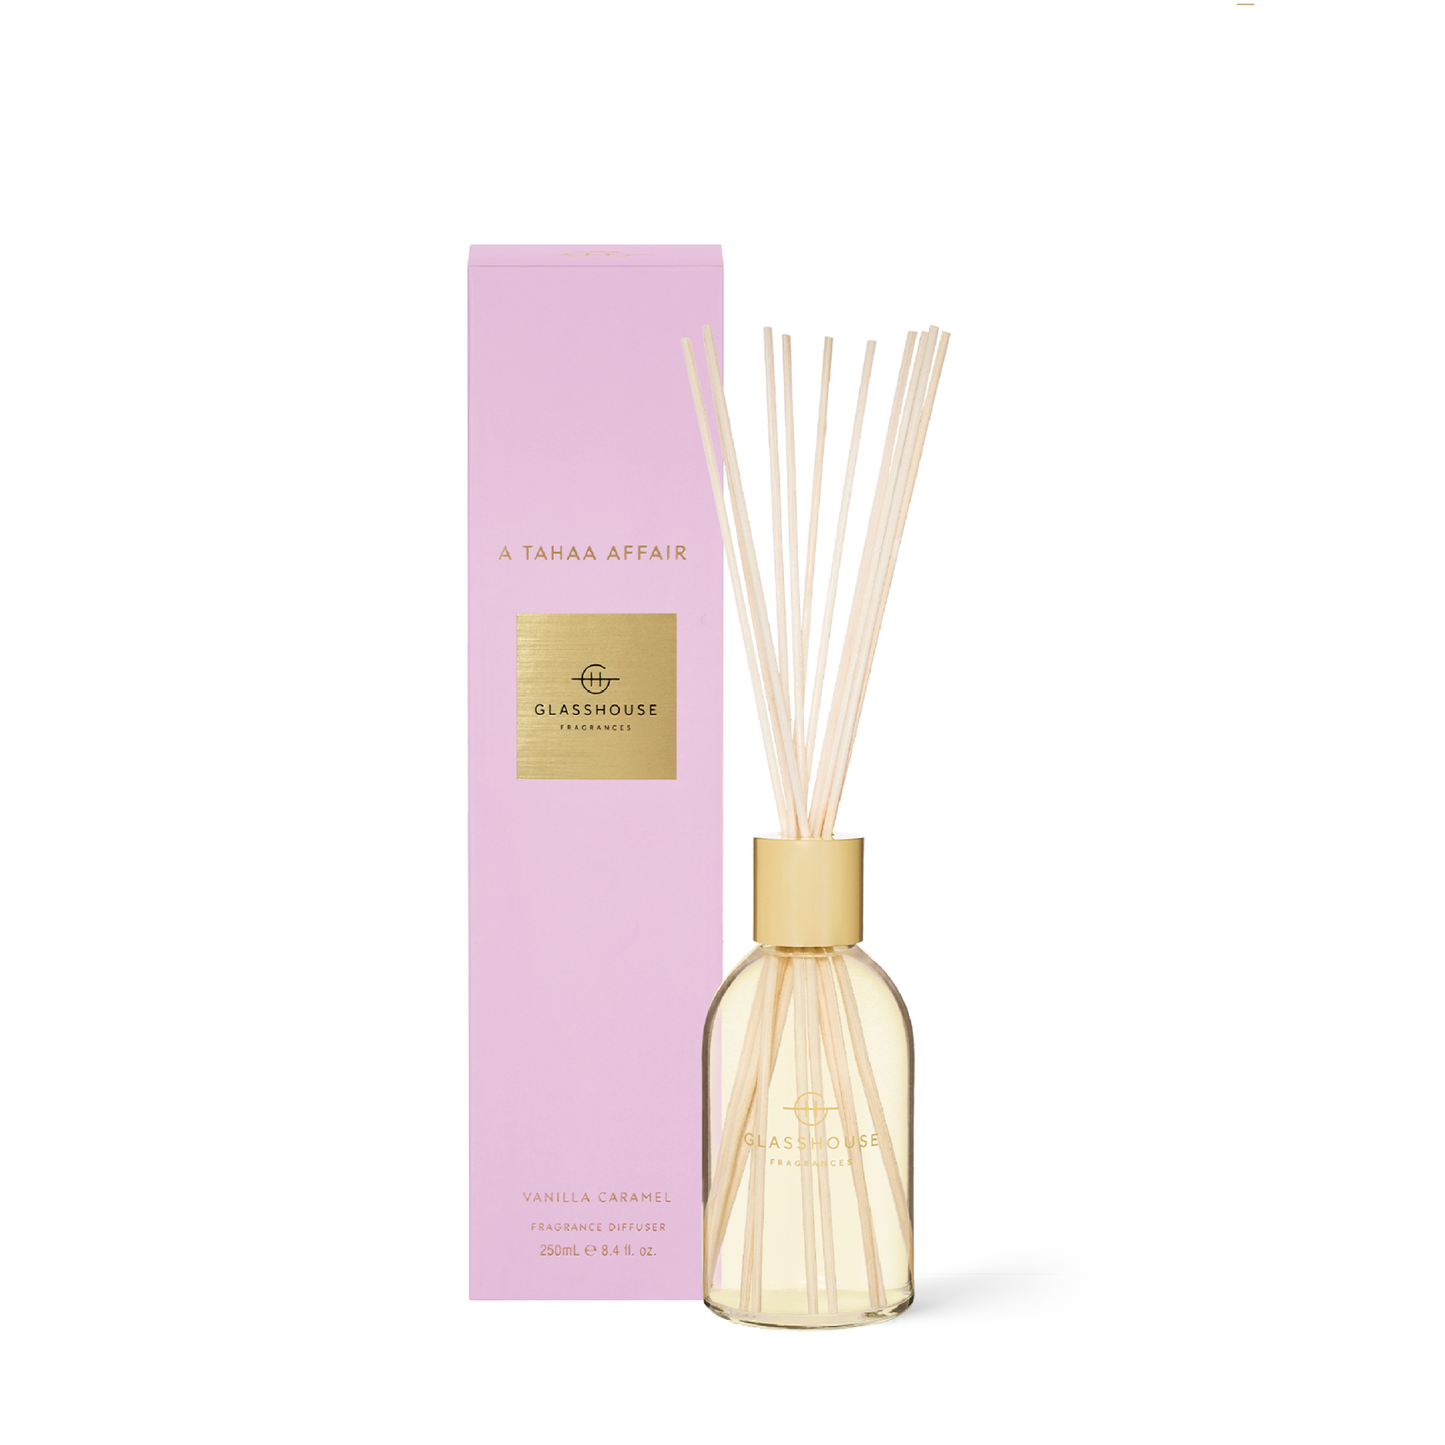 A Tahaa Affair - Vanilla Caramel | Fragrance Diffuser